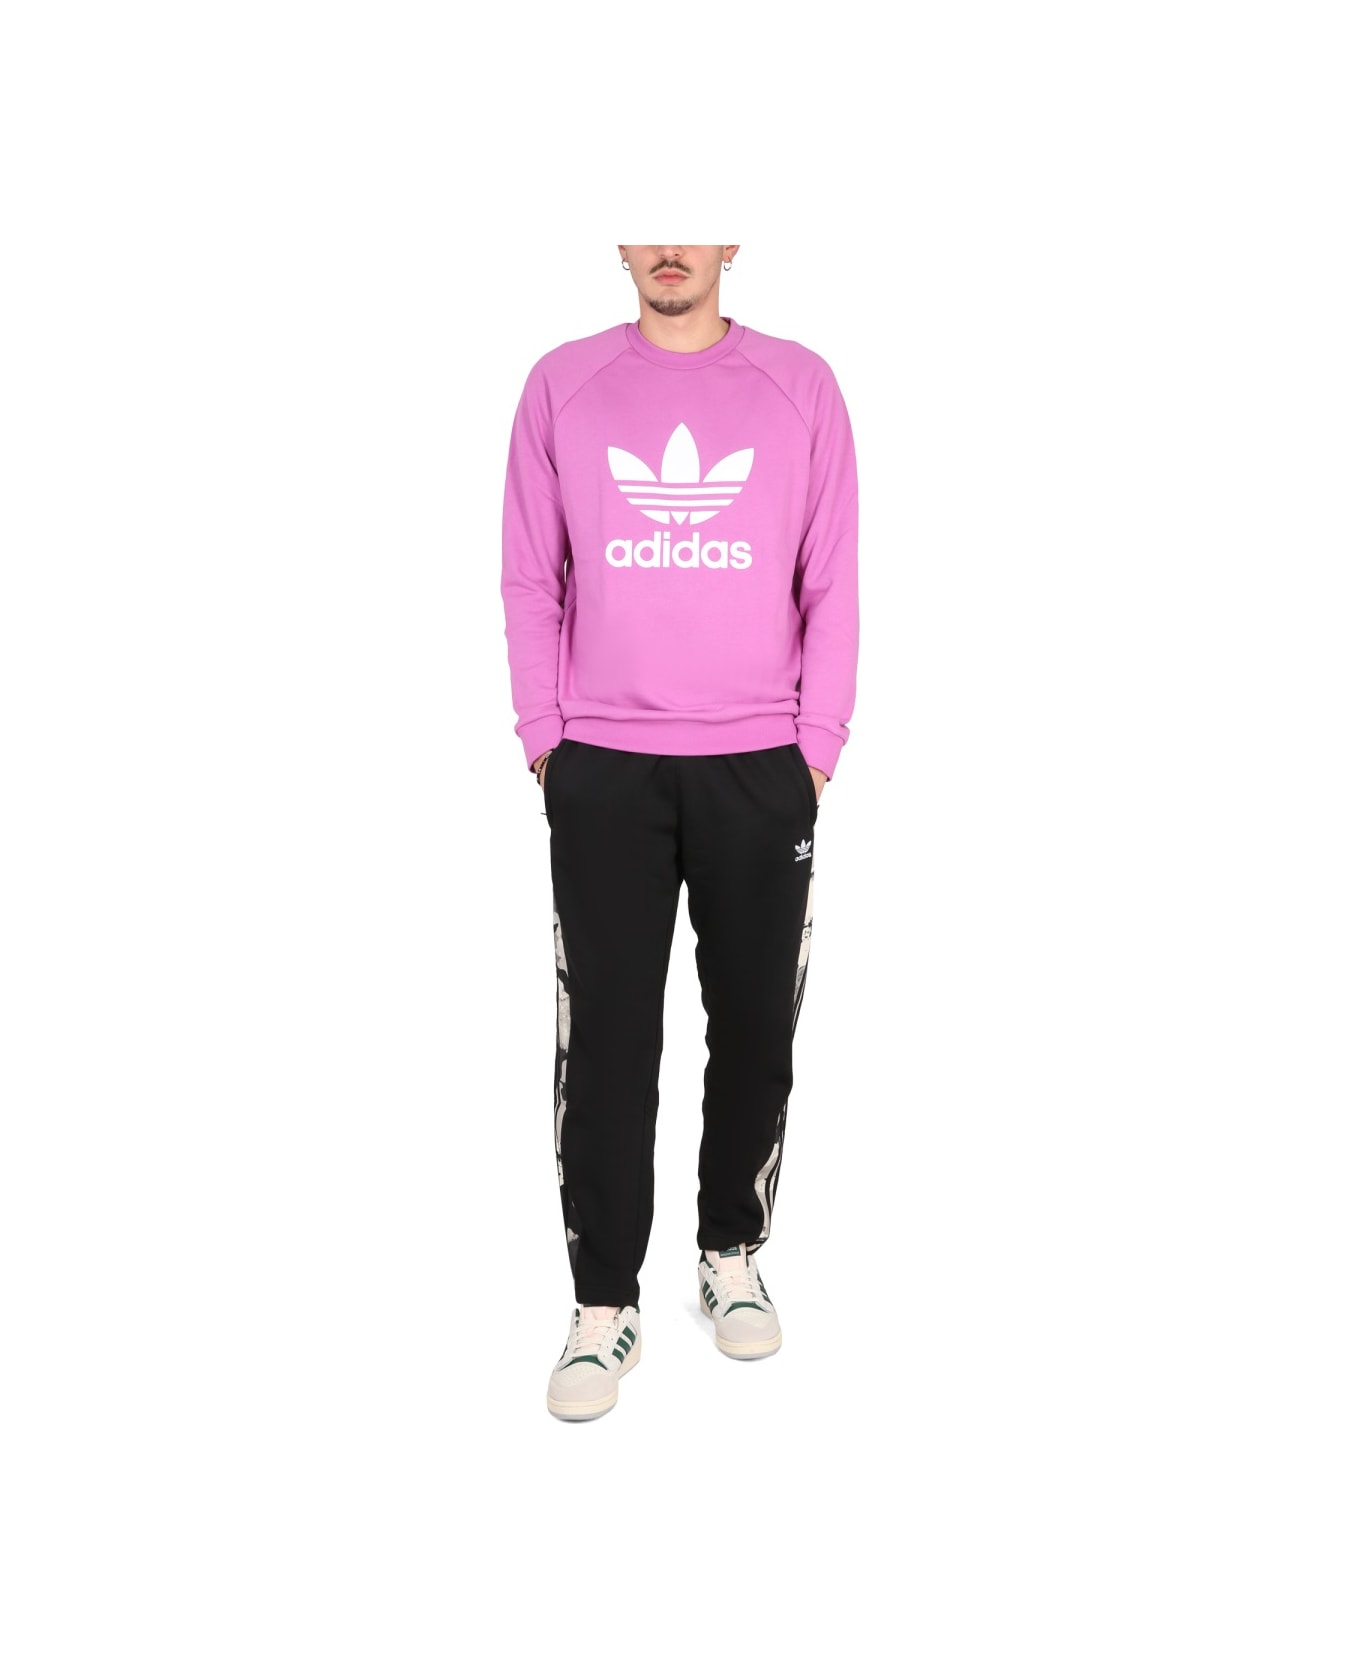 Adidas Originals Crewneck Sweatshirt - PINK